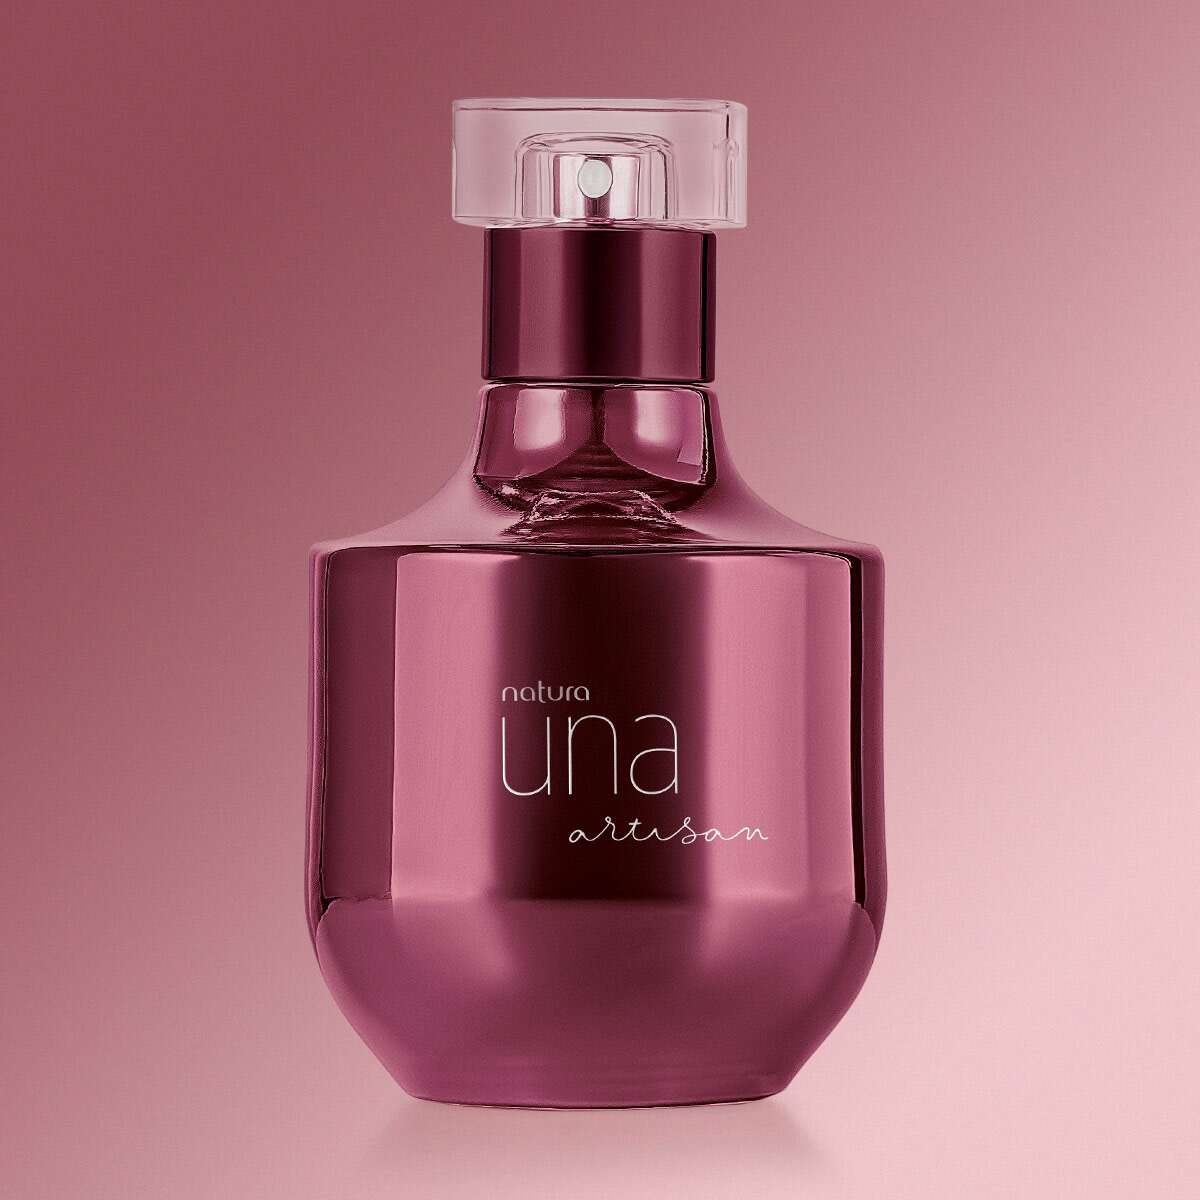  Natura - Linha Una (Artisan) - Deo Parfum Feminino 75